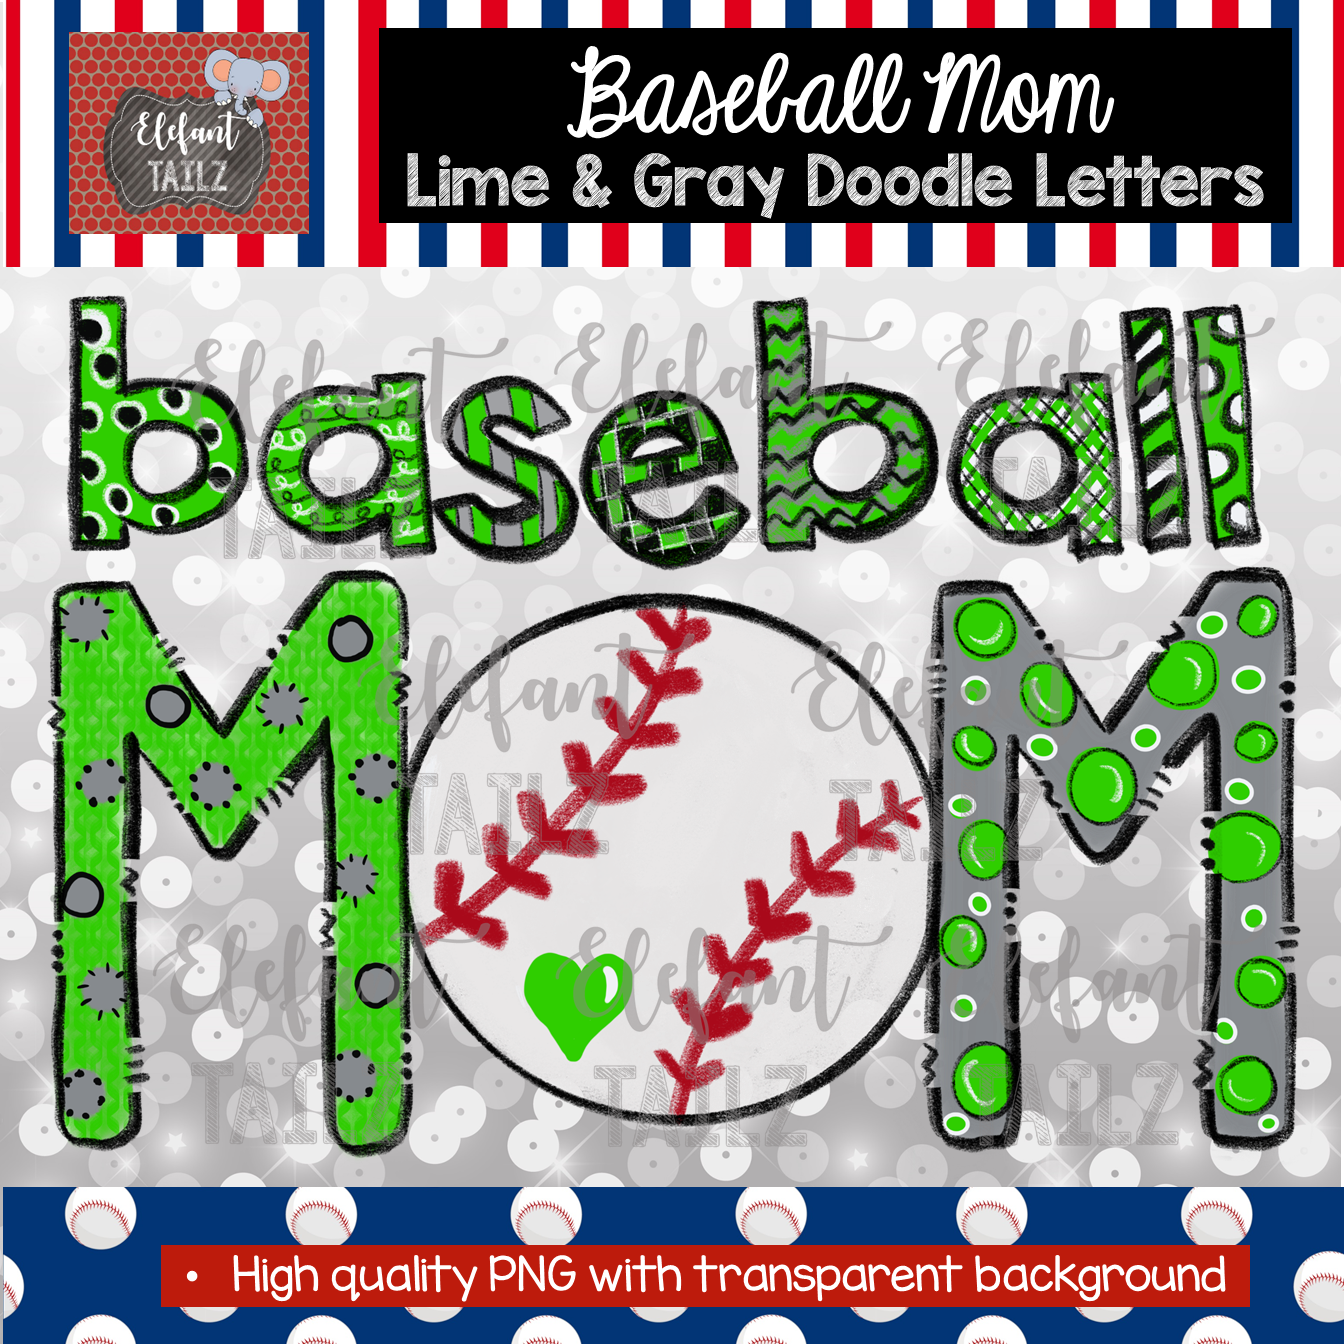 Baseball Mom Doodle Letters - Lime Green & Gray